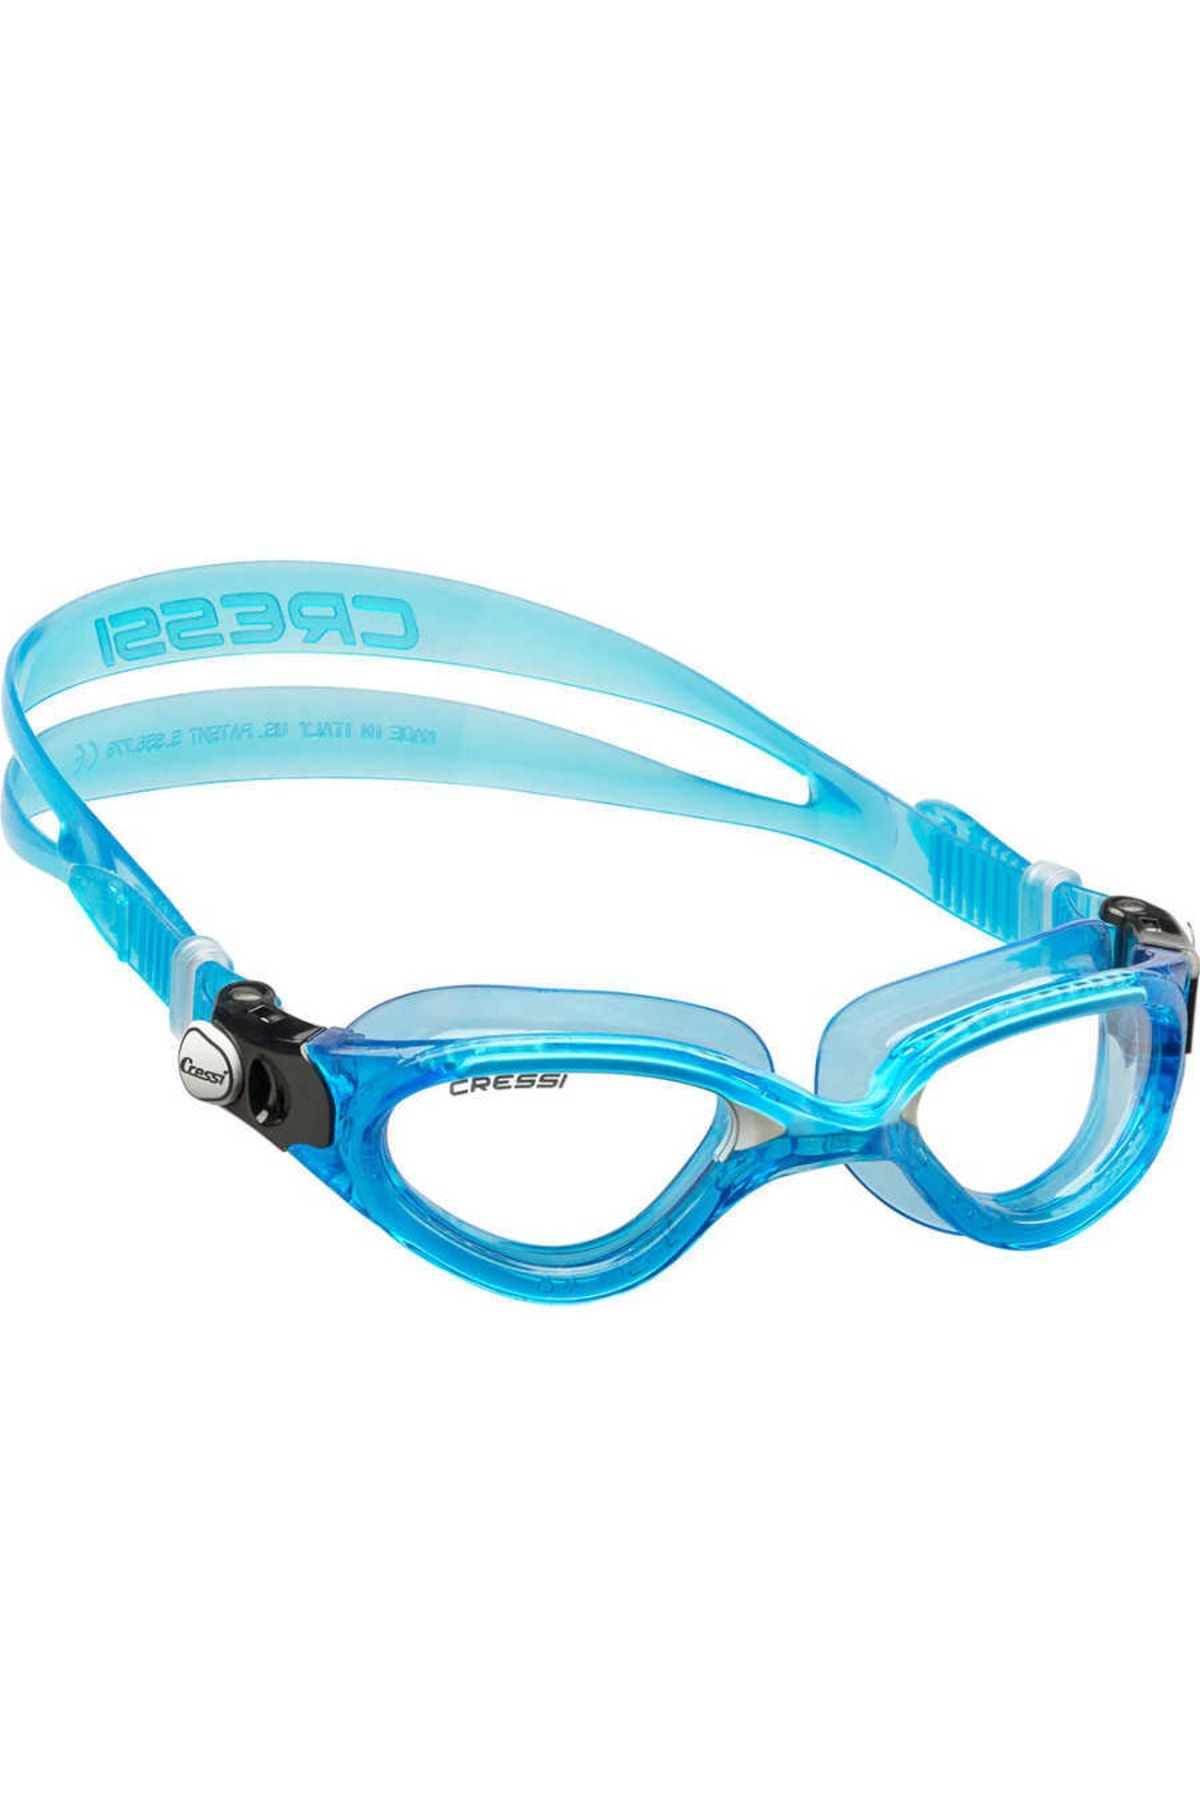 cressi sub Flash Deniz Gözlüğü Clear-blue-blue